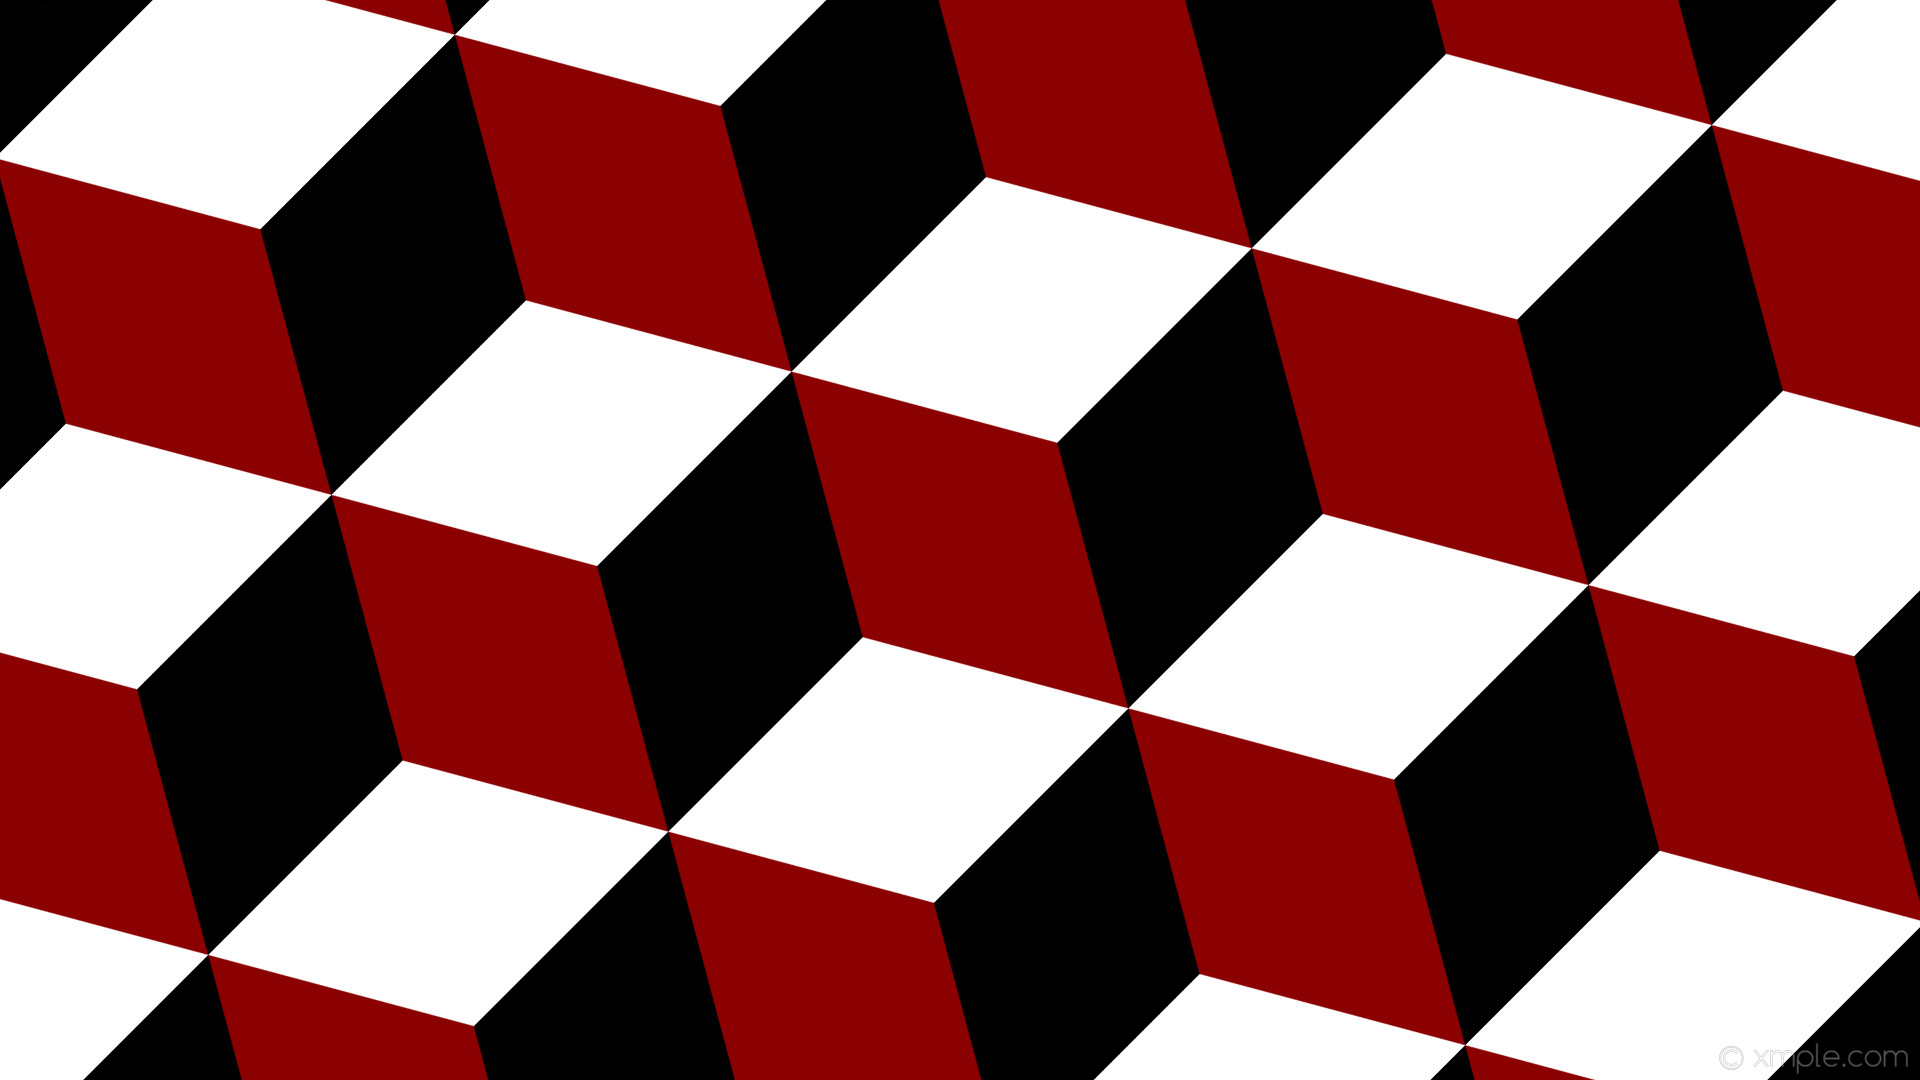 1920x1080 wallpaper red 3d cubes black white dark red #8b0000 #000000 #ffffff 135Â°